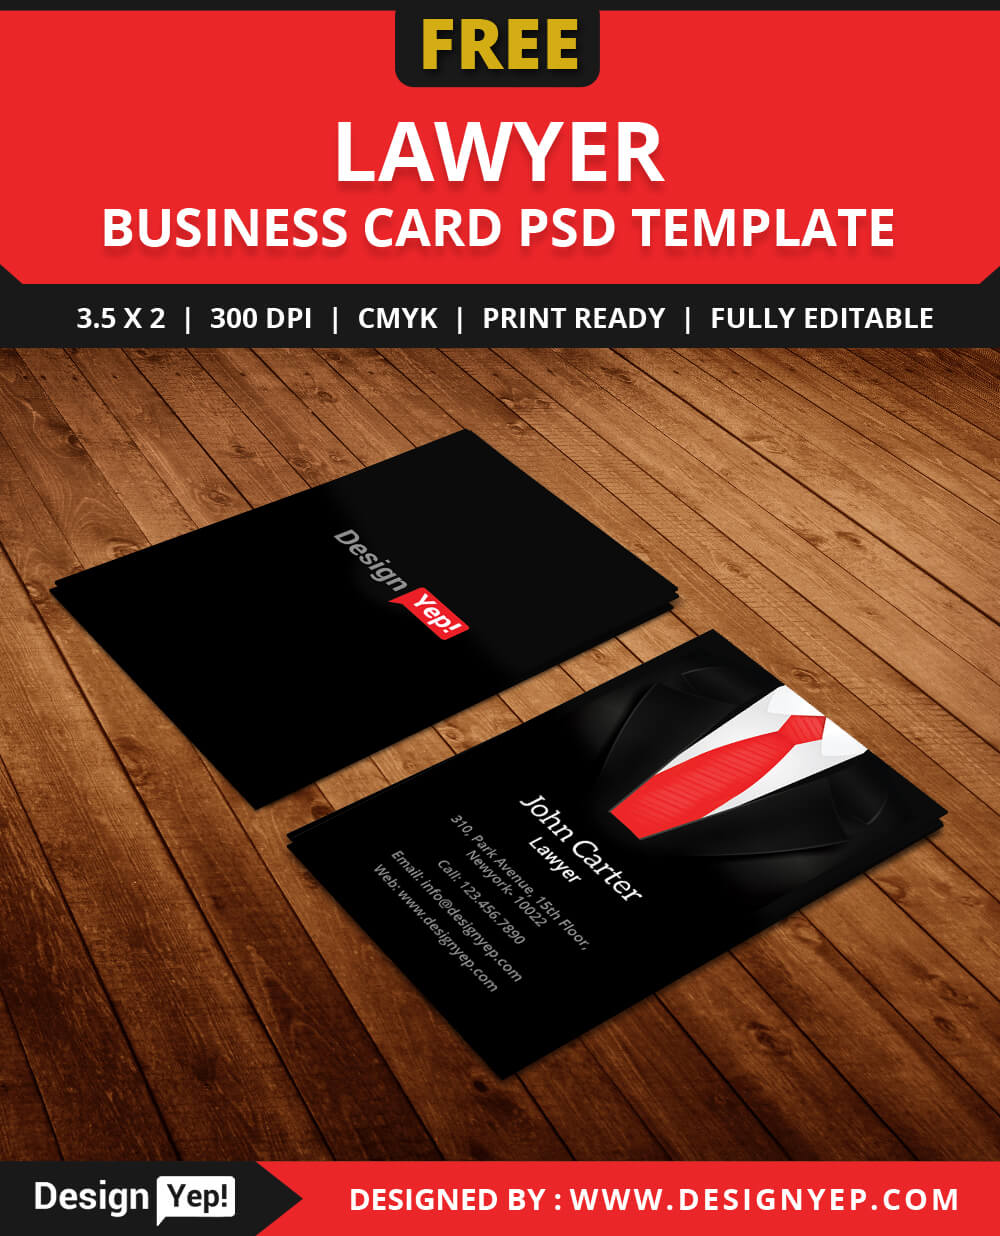 Free Lawyer Business Card Template Psd – Designyep Inside Name Card Design Template Psd